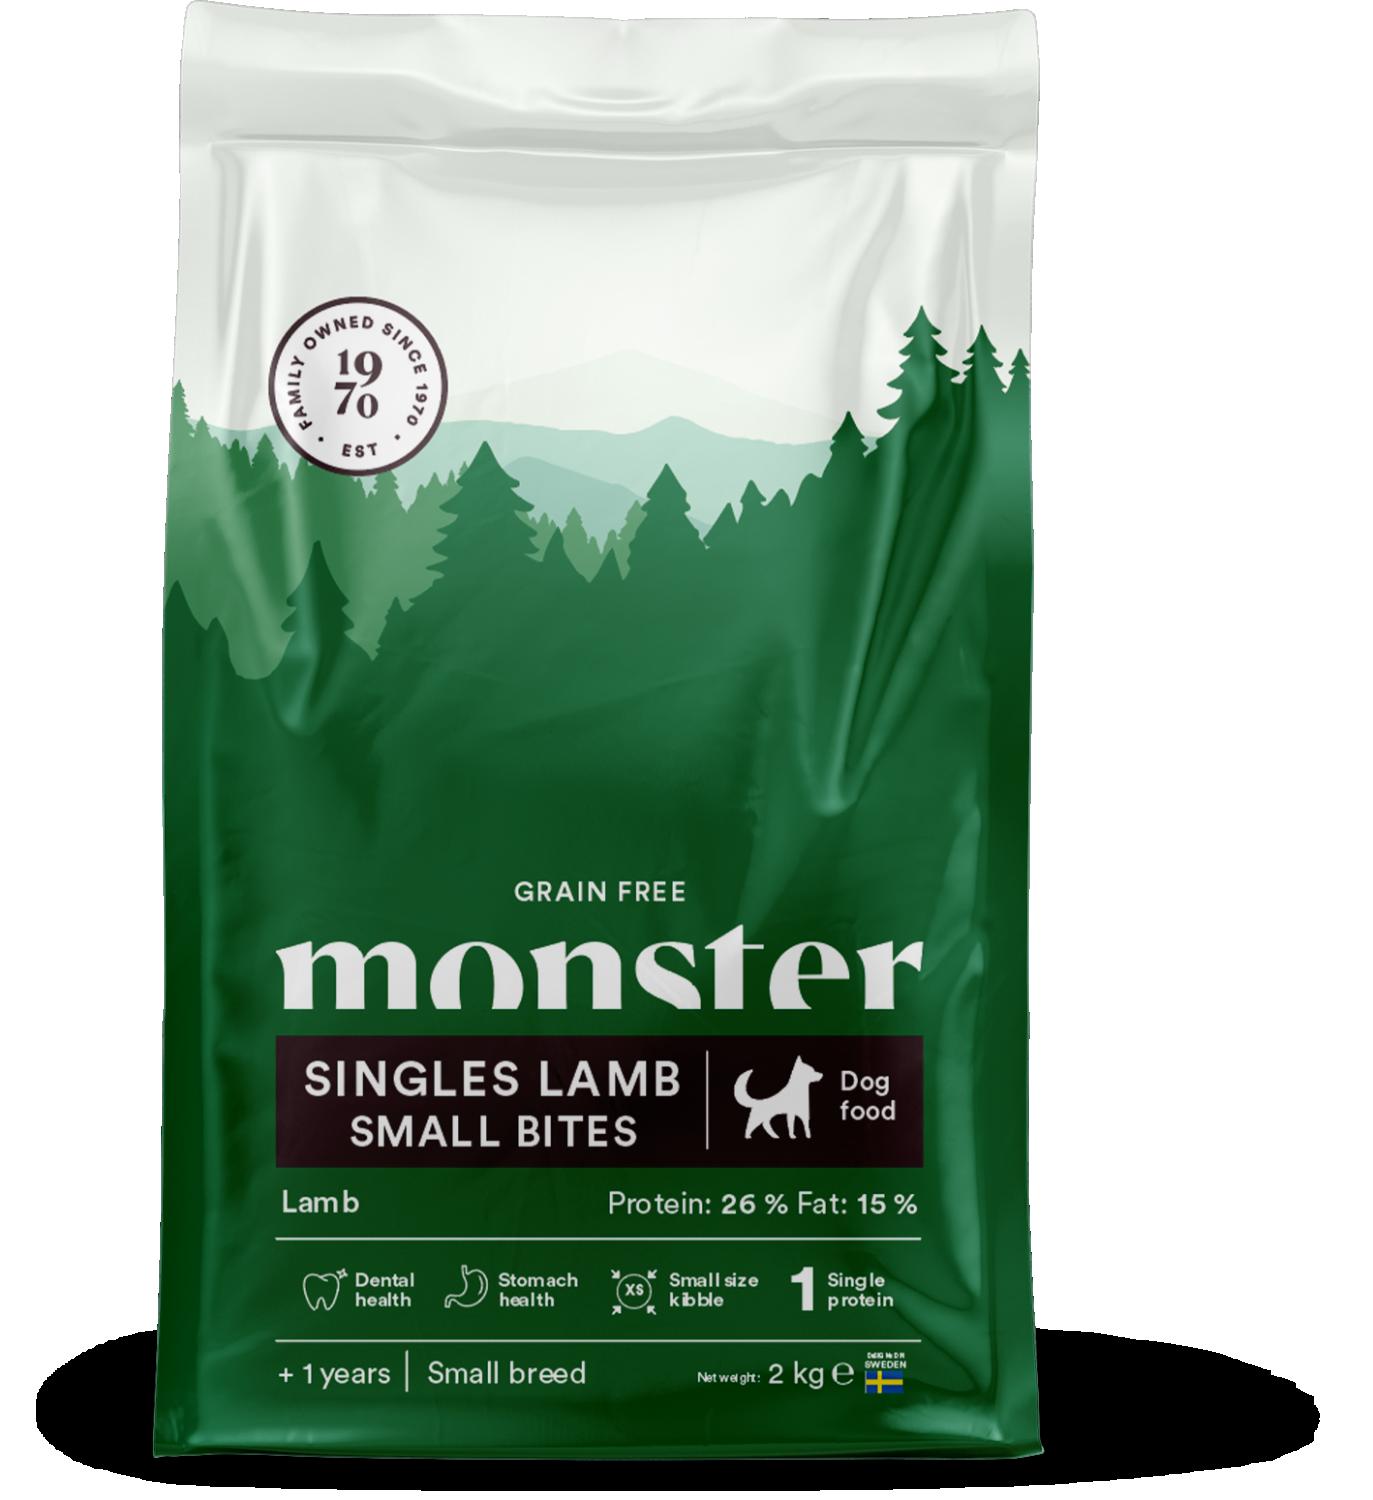 Monster Dog GF Singles Lamb Small Bites 2 kg